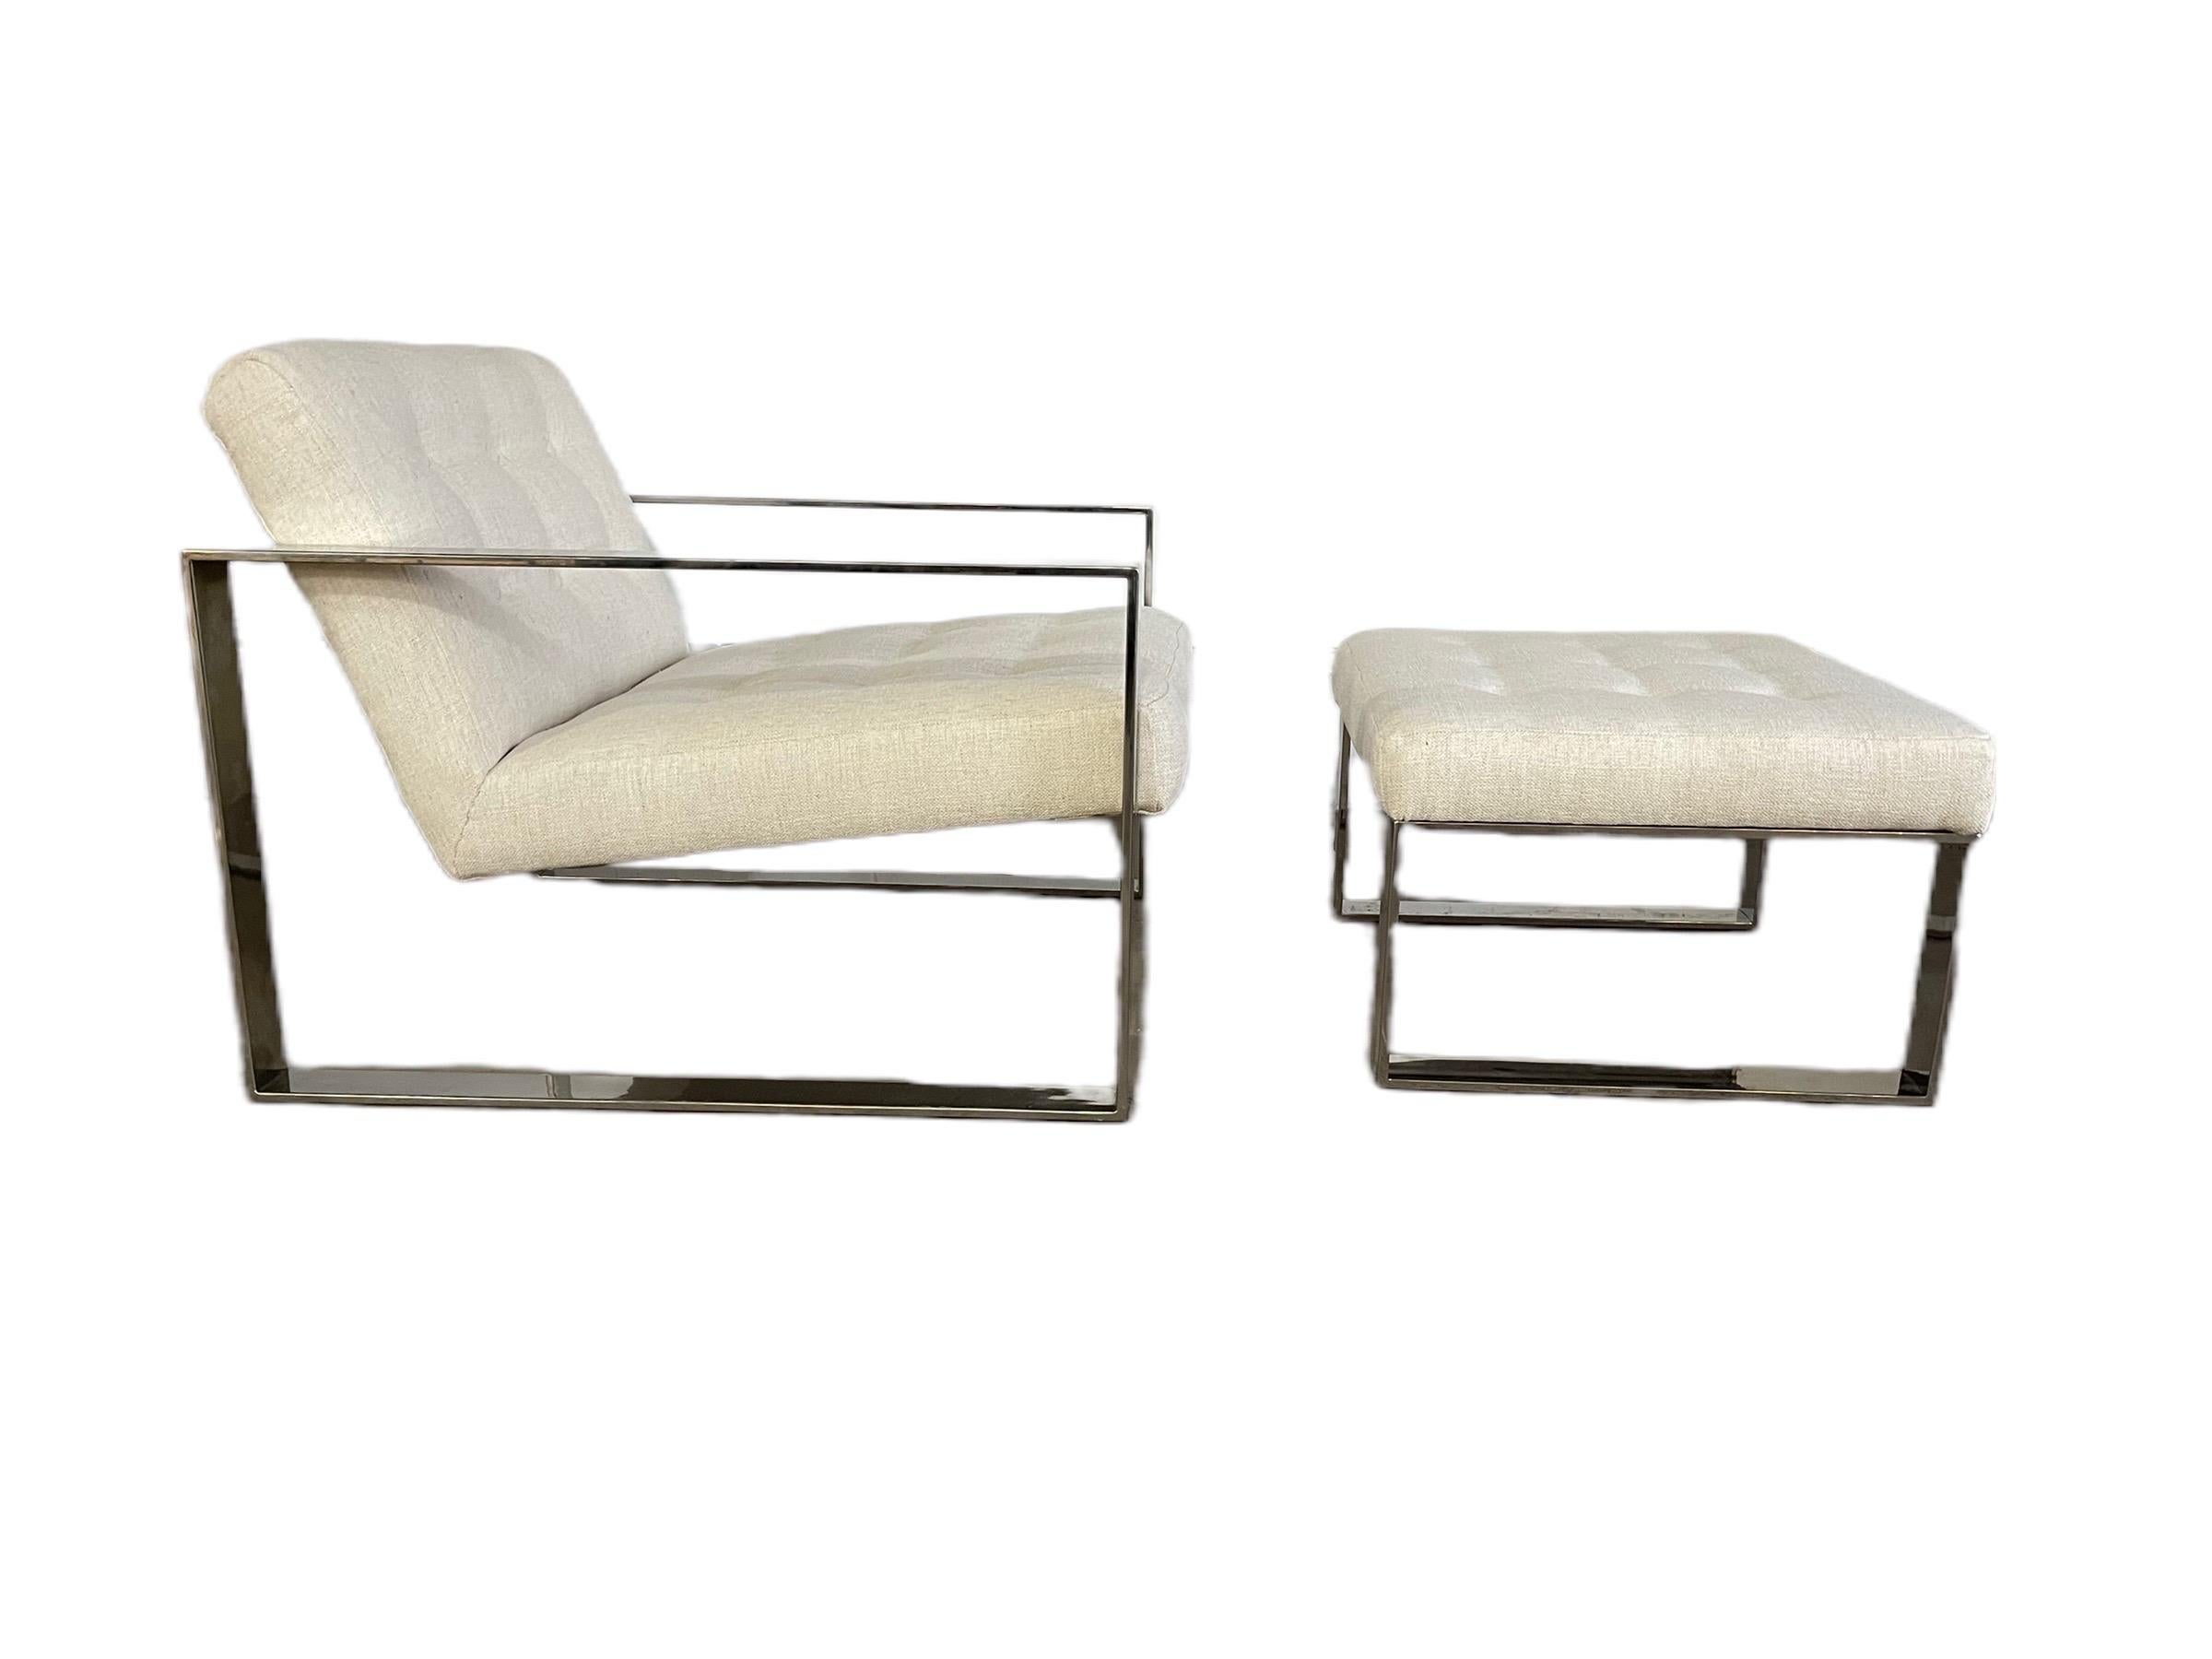  Milo Baughman Style Chrome Lounge Chair & Ottoman  1